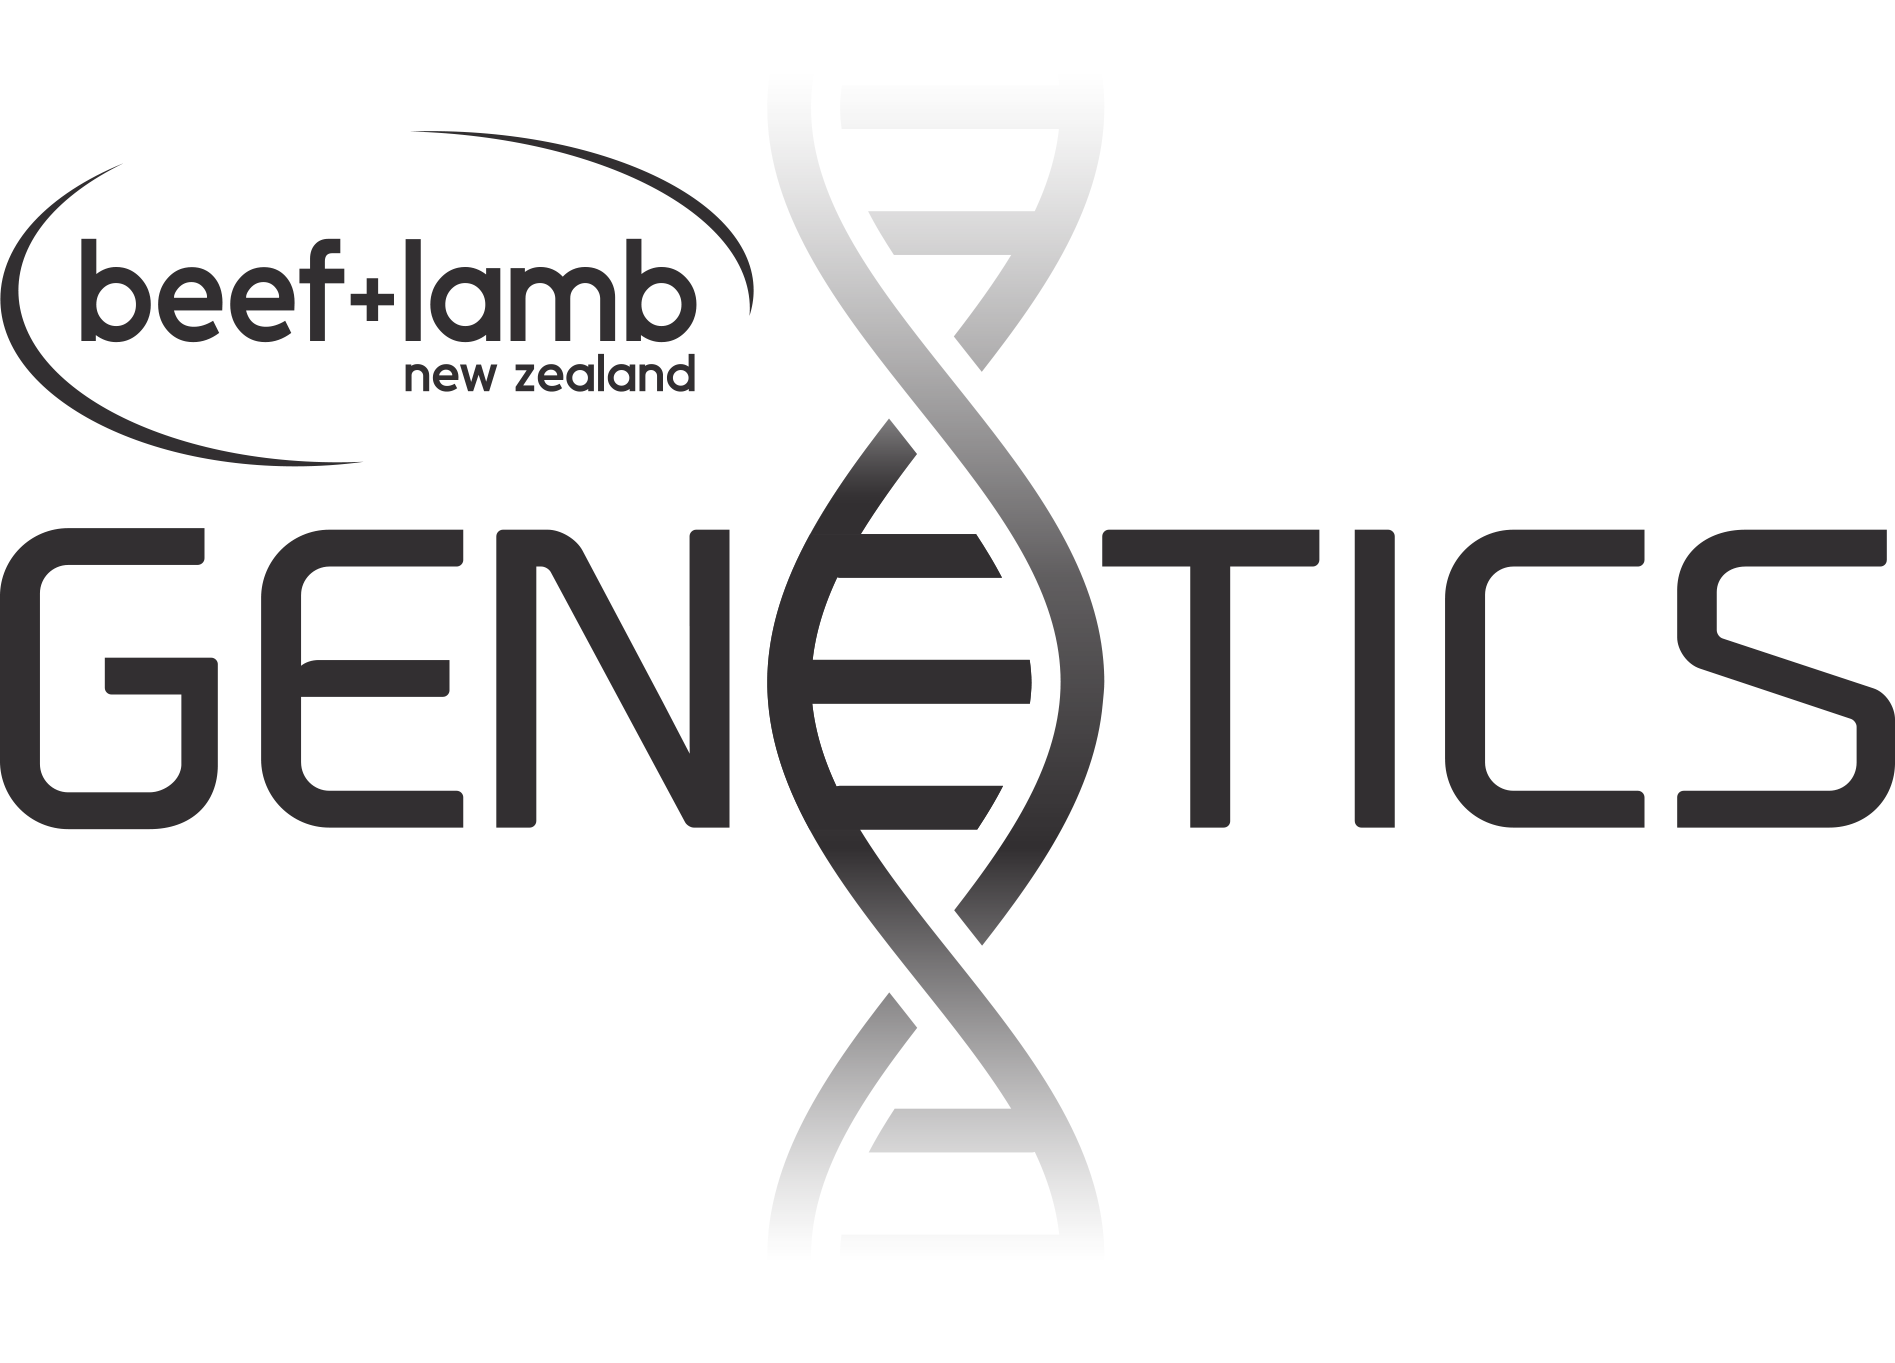 B+LNZ-GENETICS-PRIMARY-BLACK